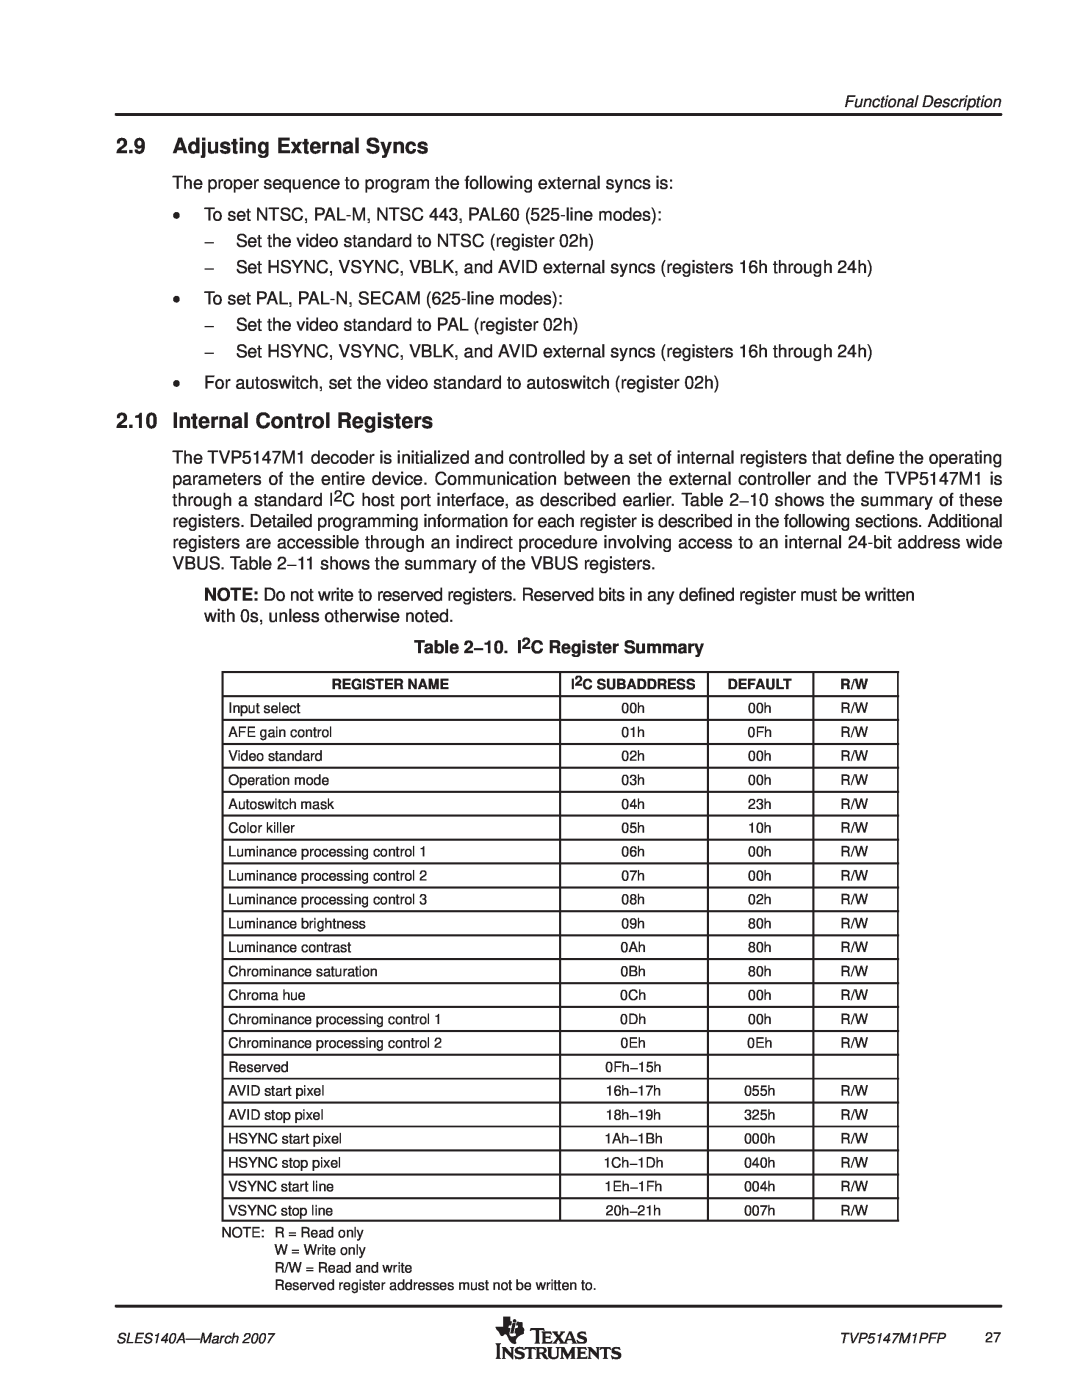 Texas Instruments TVP5147M1PFP manual Adjusting External Syncs, Internal Control Registers, 10. I 2C Register Summary 